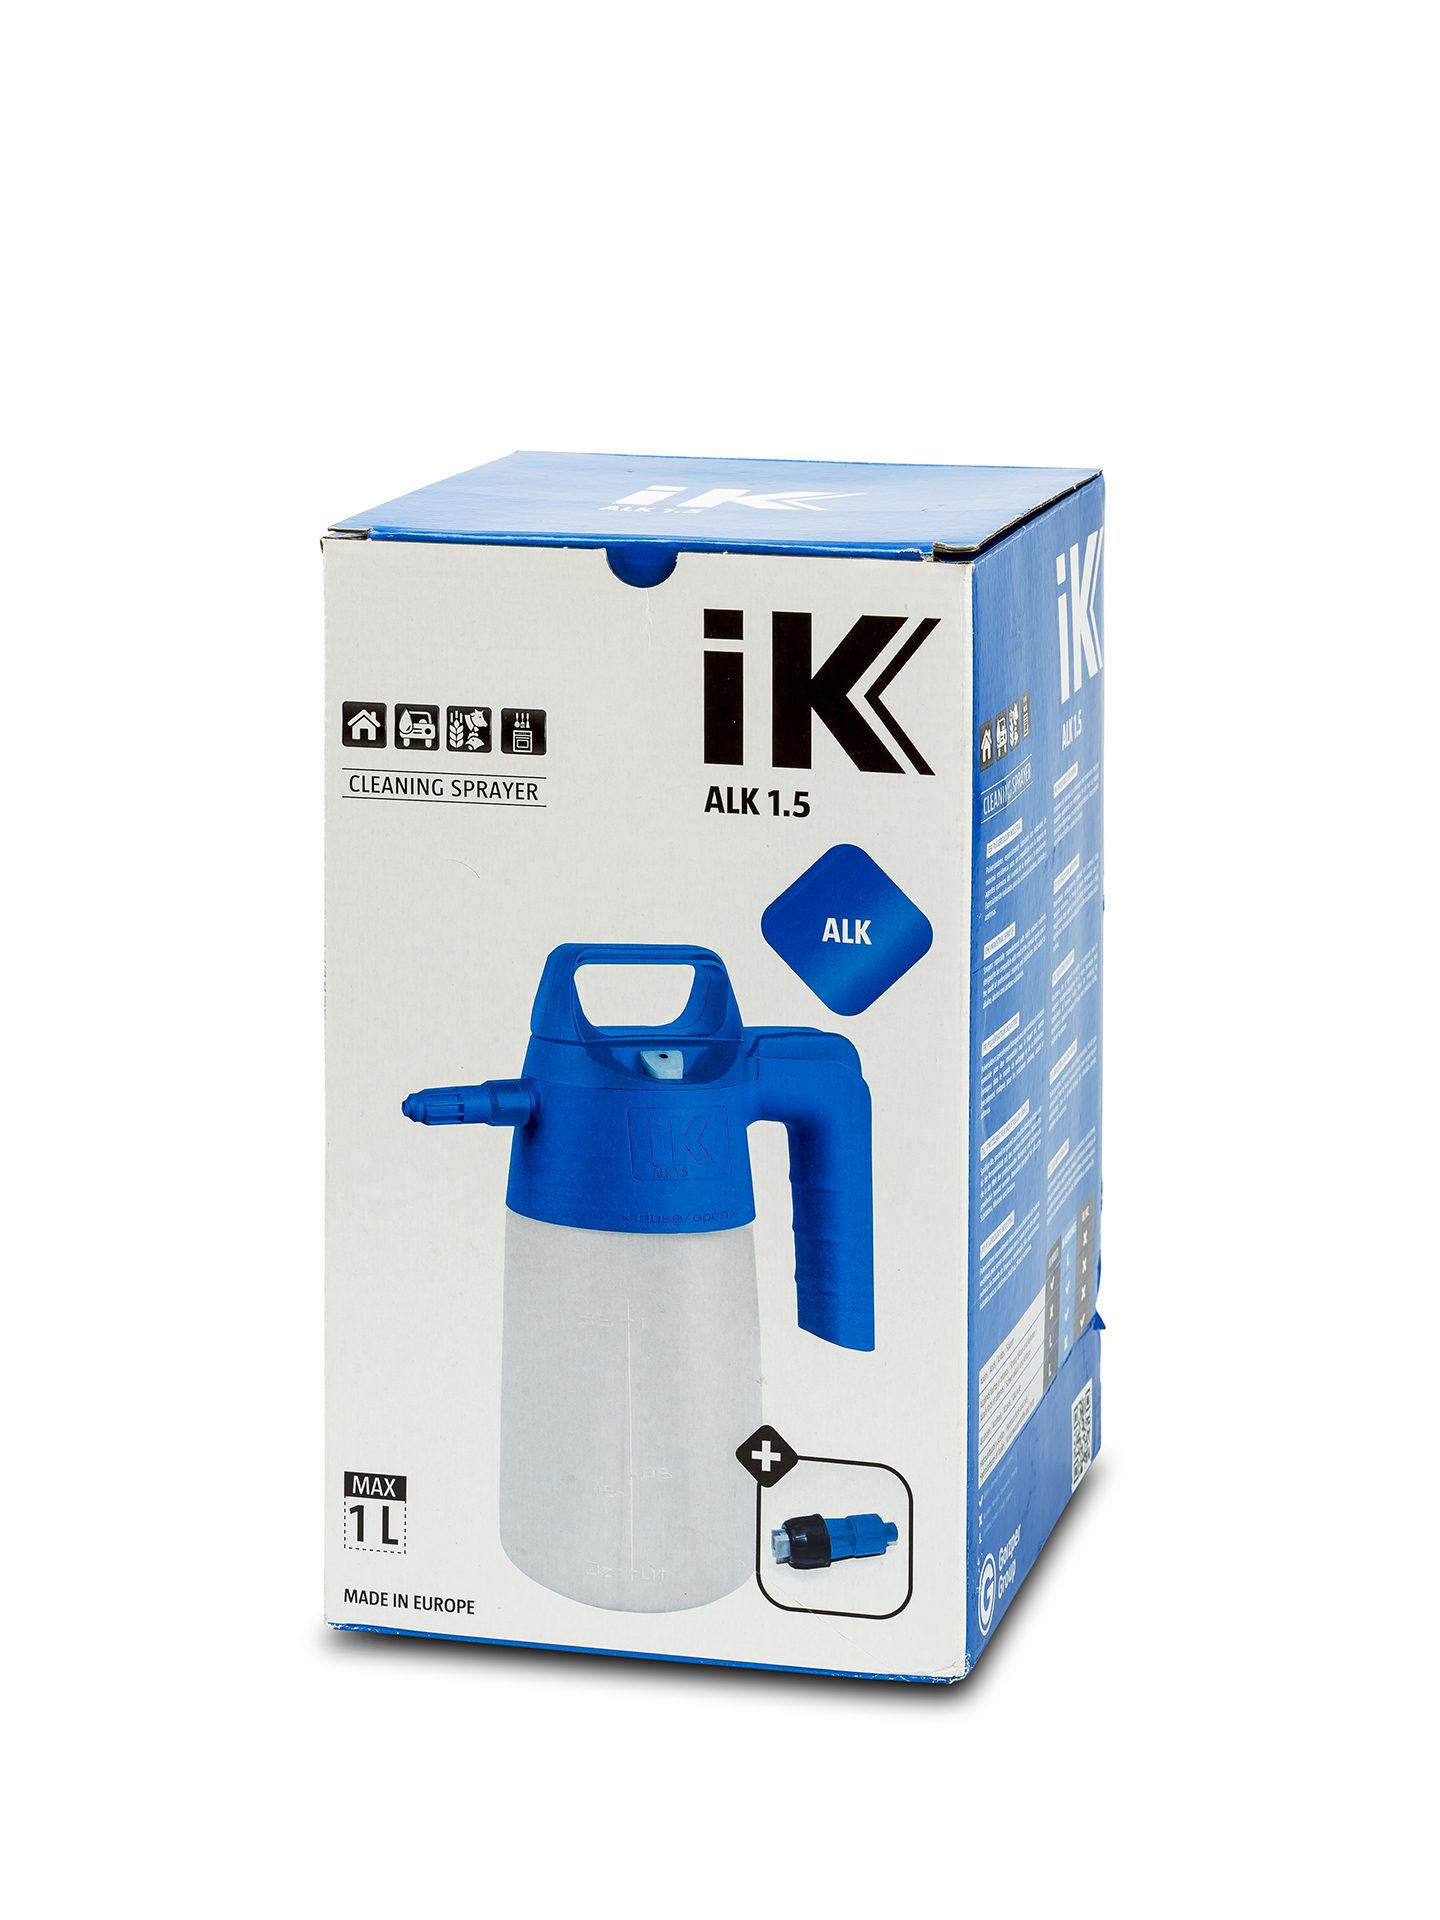 iK Alkaline 9 Sprayer